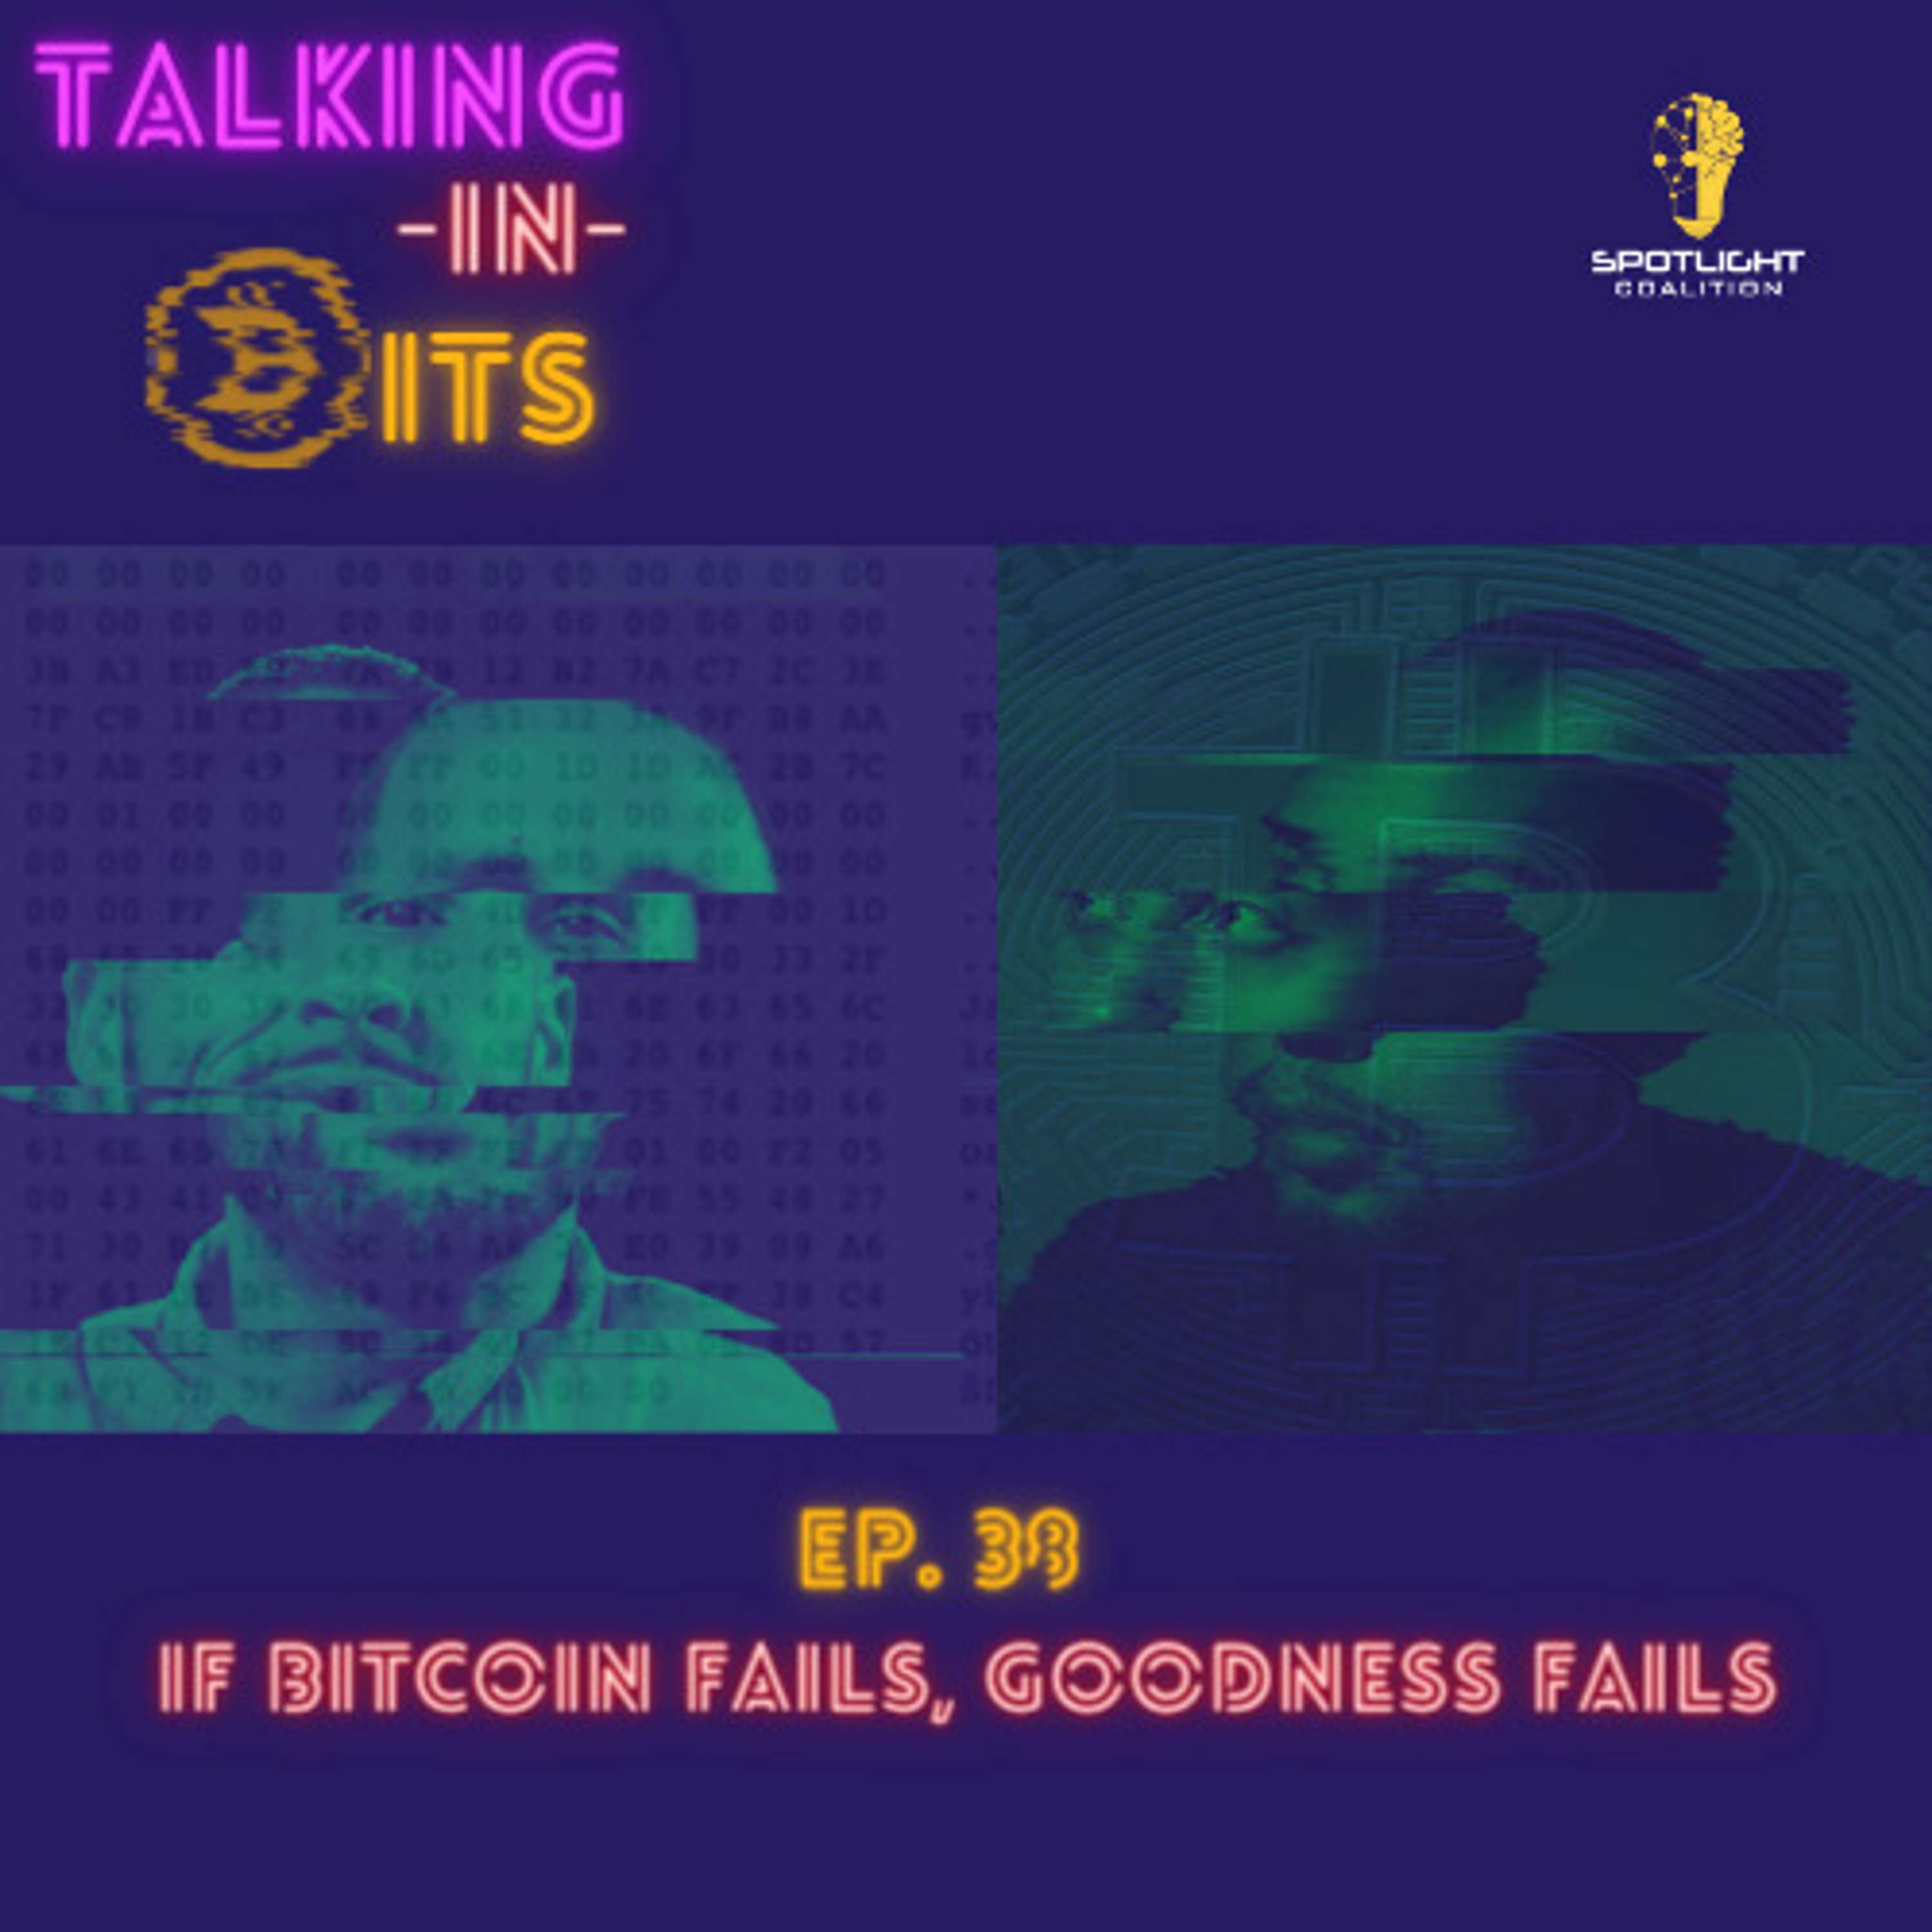 Talking in Bits: If Bitcoin Fails, Goodness Fails